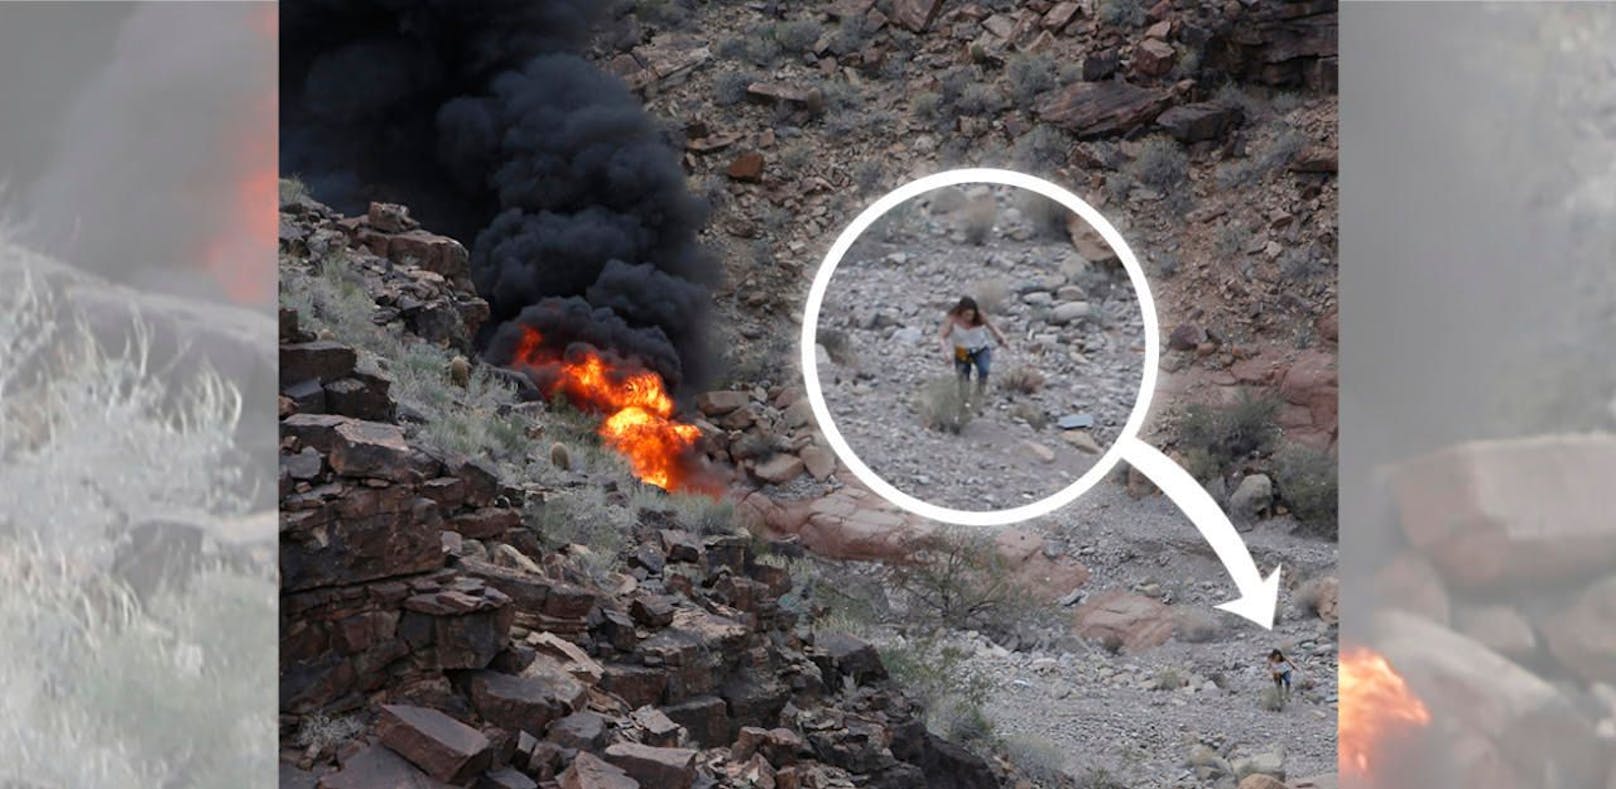 Links der brennende Helikopter, rechts die Überlebende.